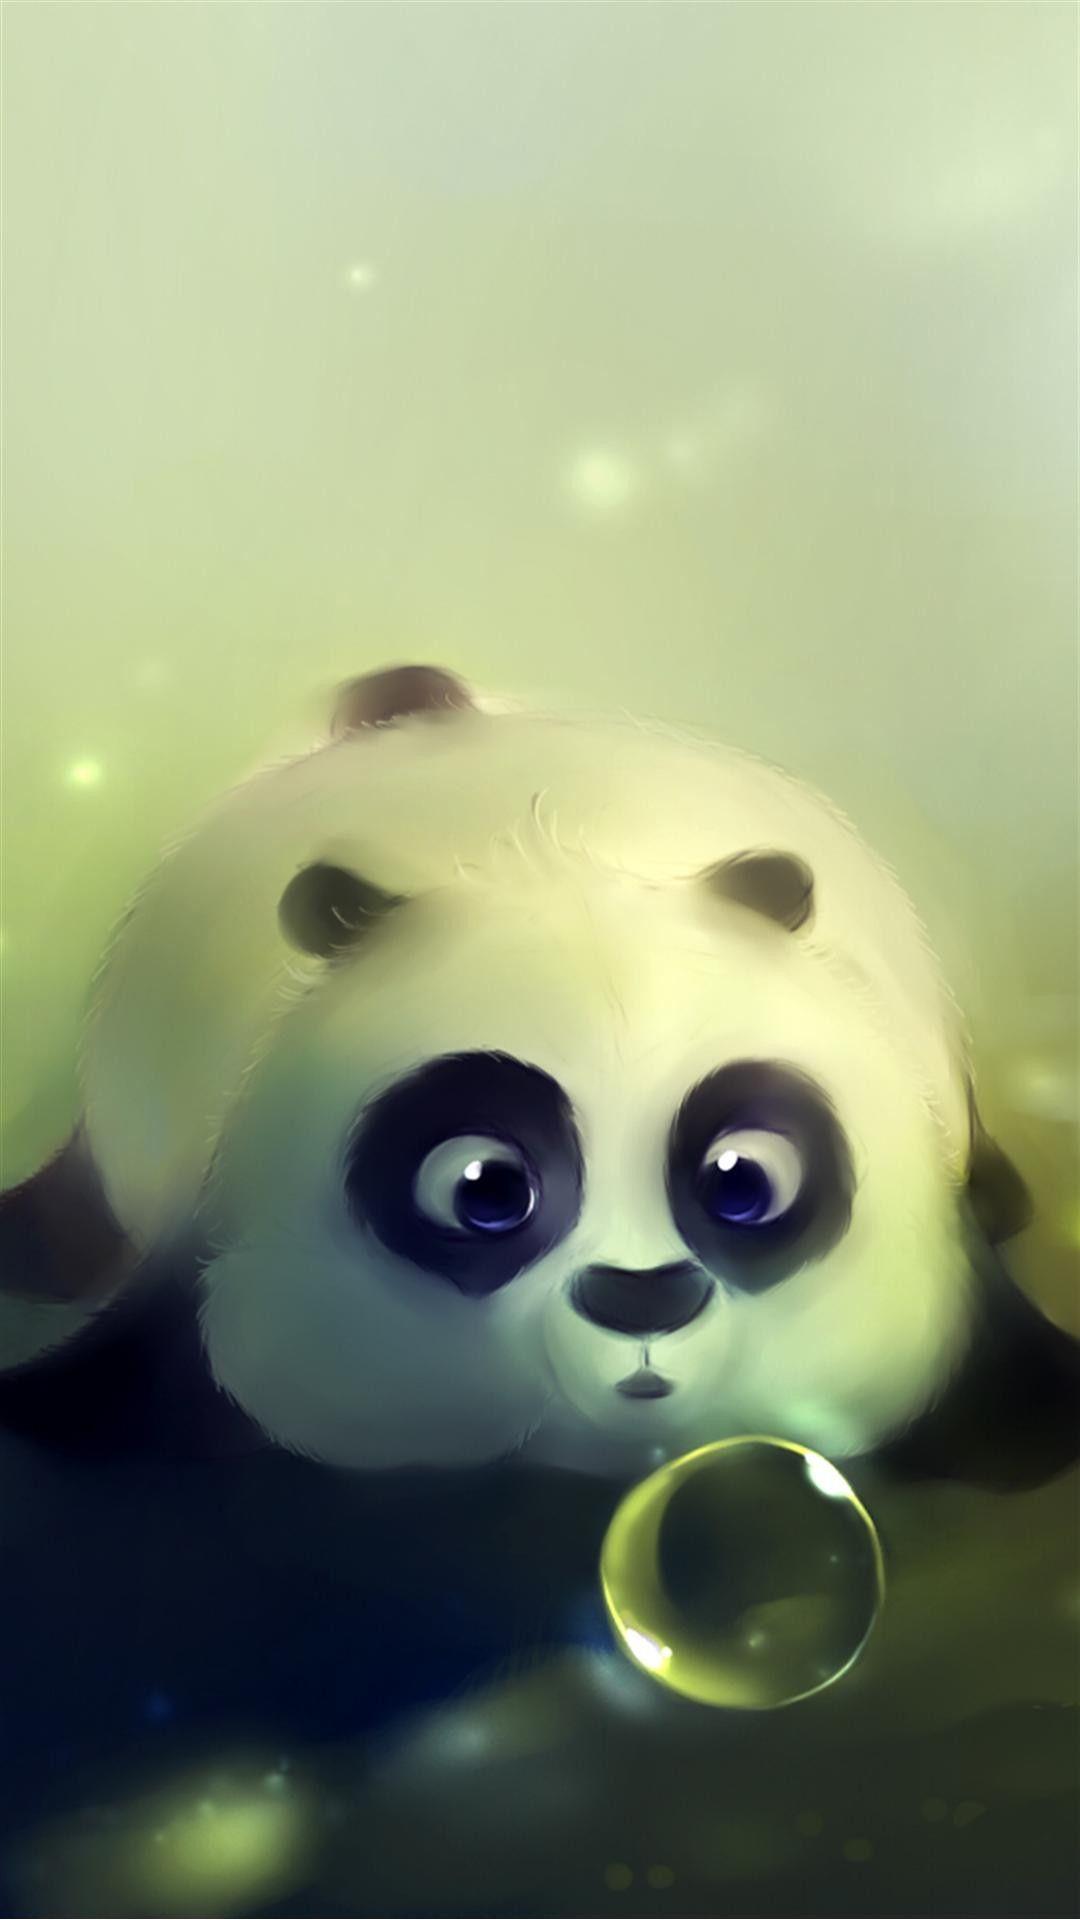 Cute Panda Bubble Android Wallpaper free download